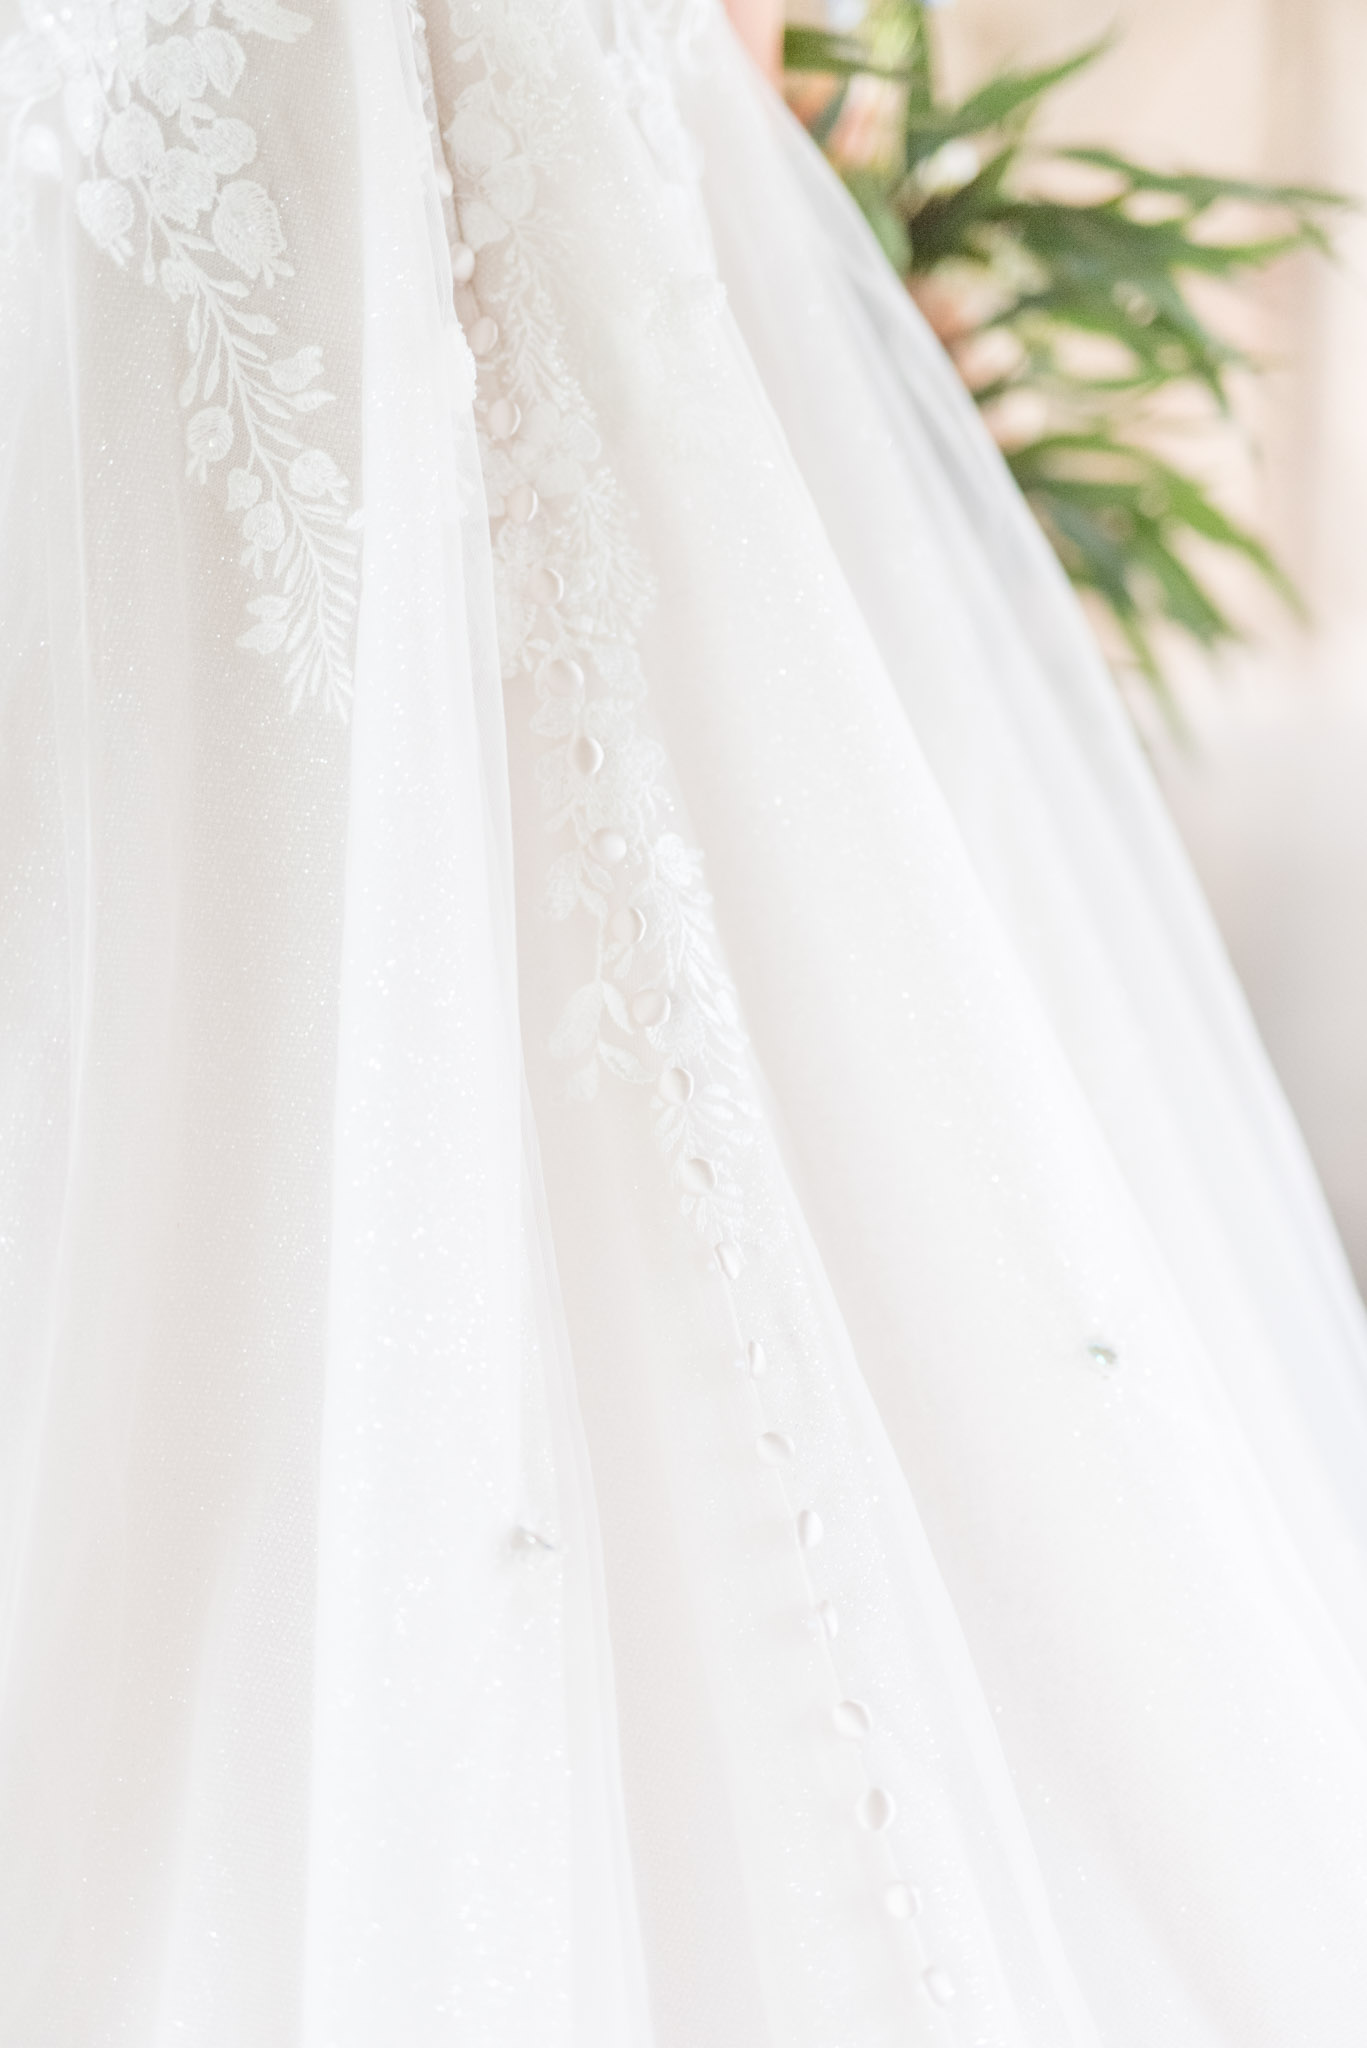 Bride's wedding dress closeup.